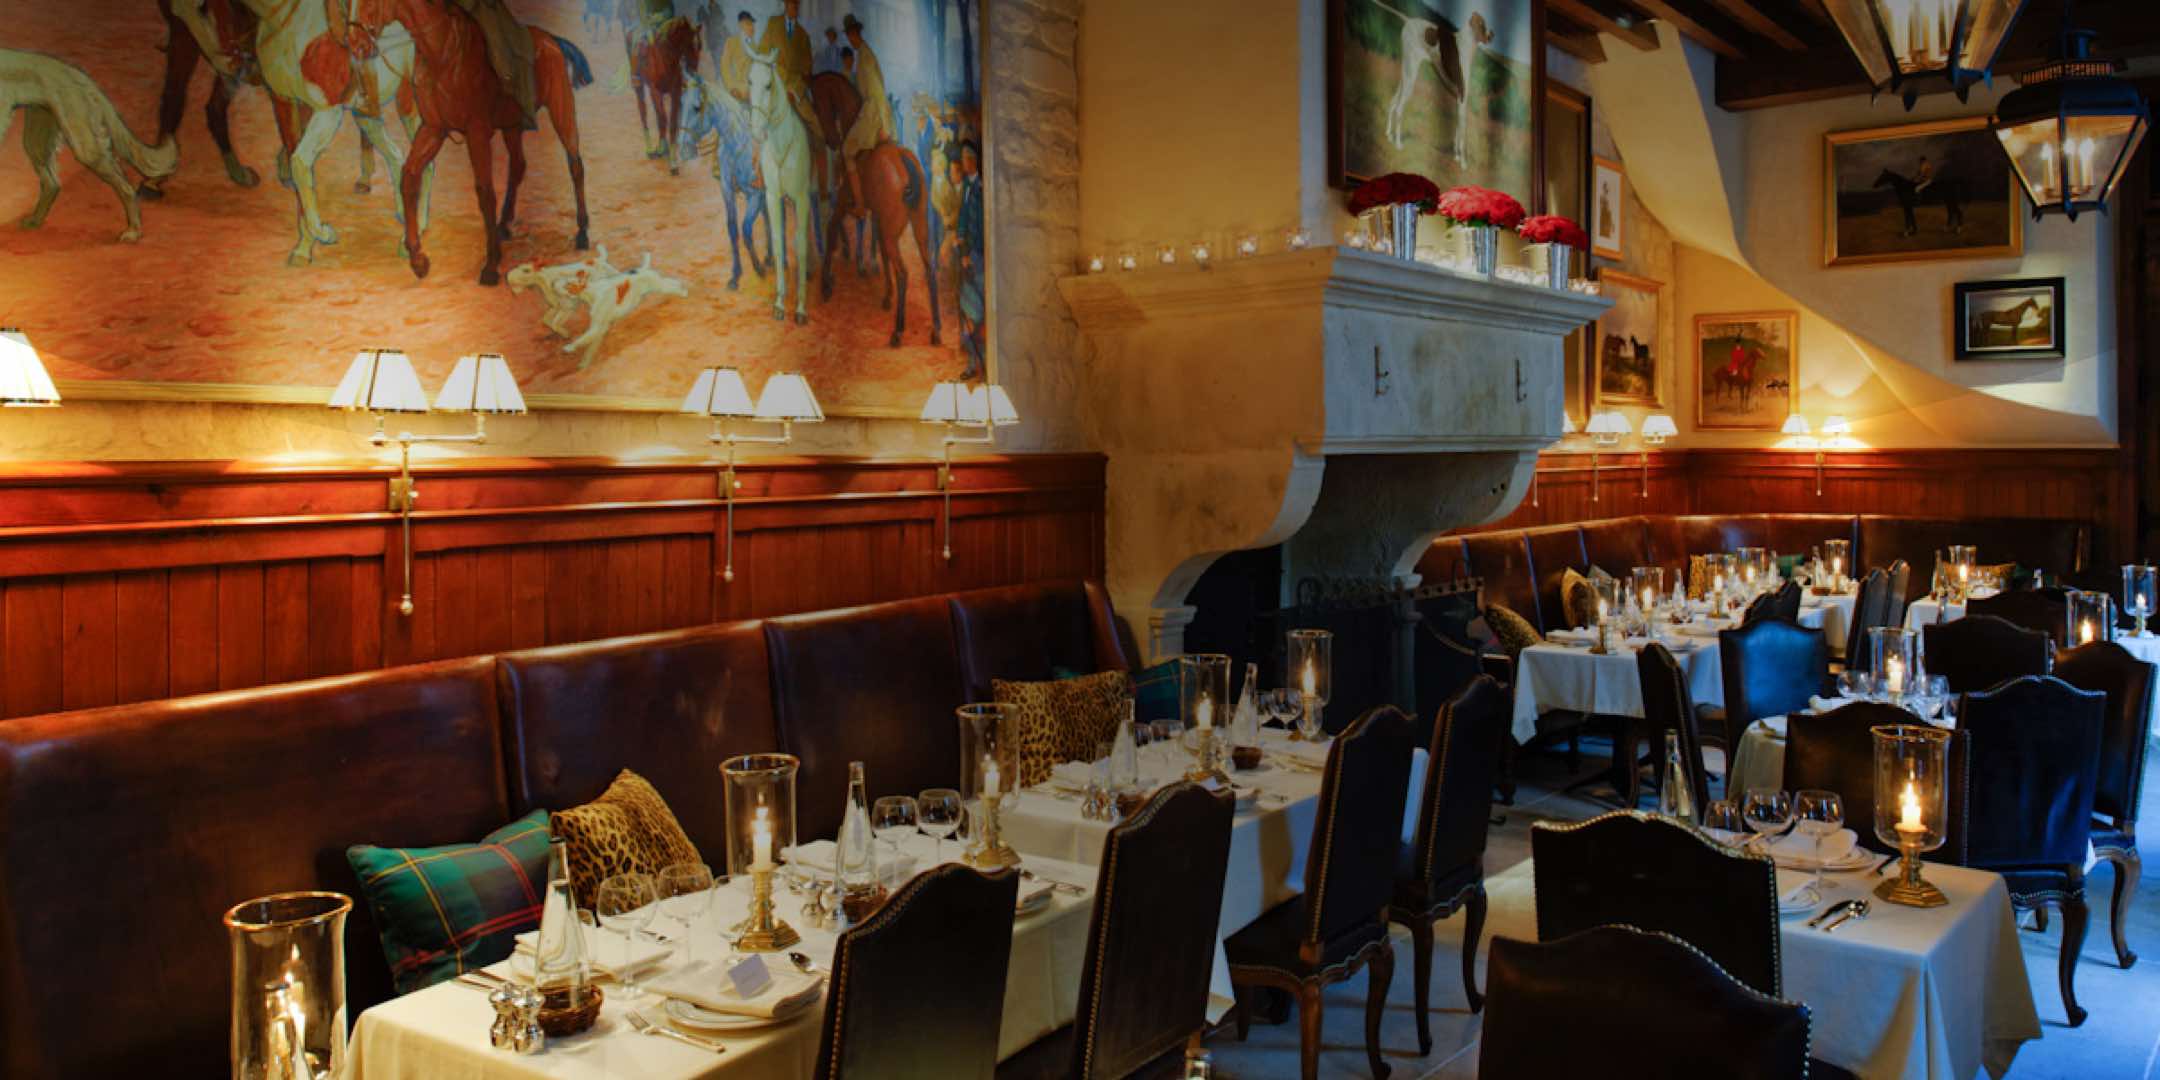 Ralph Lauren's restaurant - Paris  Paris restaurants, St germain